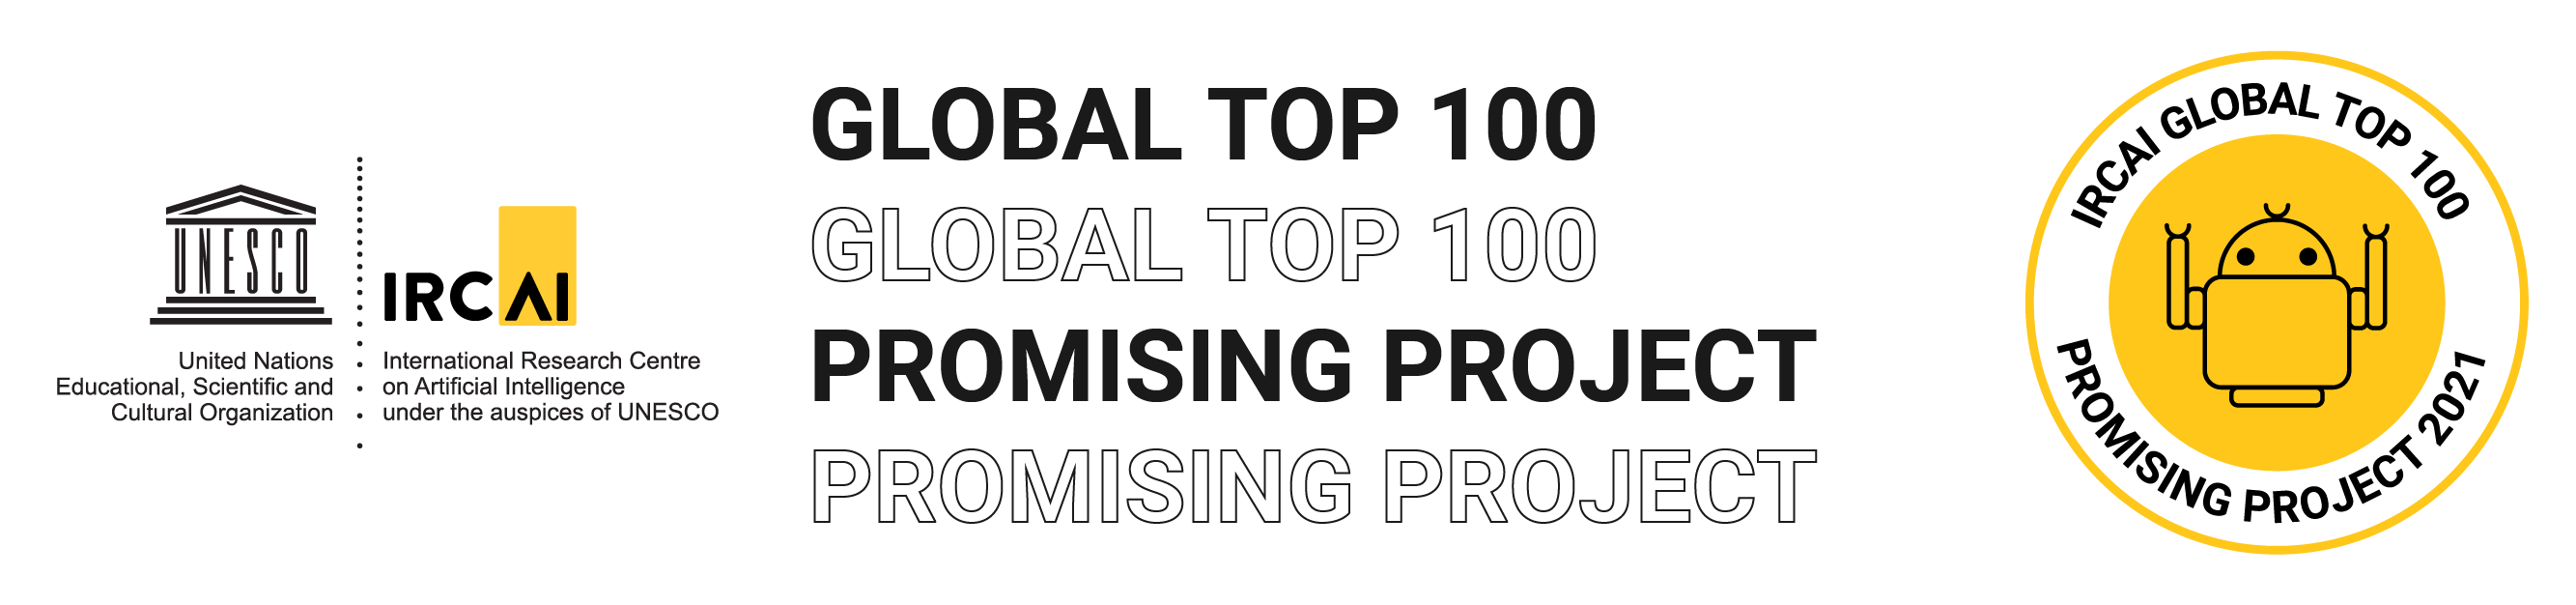 IRCAI top 100 promising project